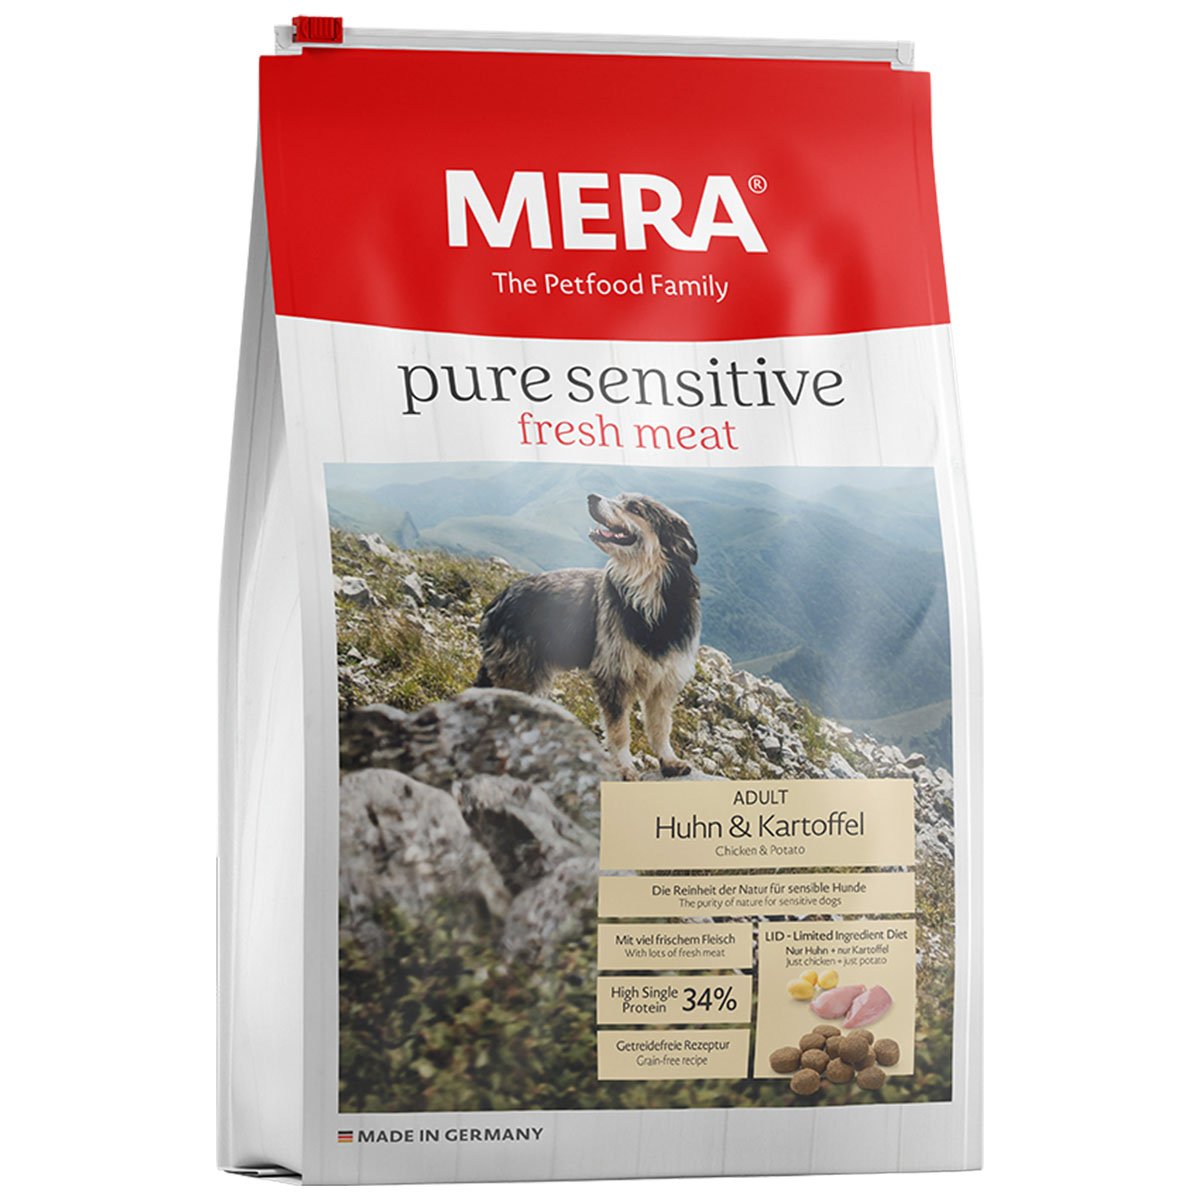 MERA pure sensitive fresh meat Adult Huhn und Kartoffel 1kg